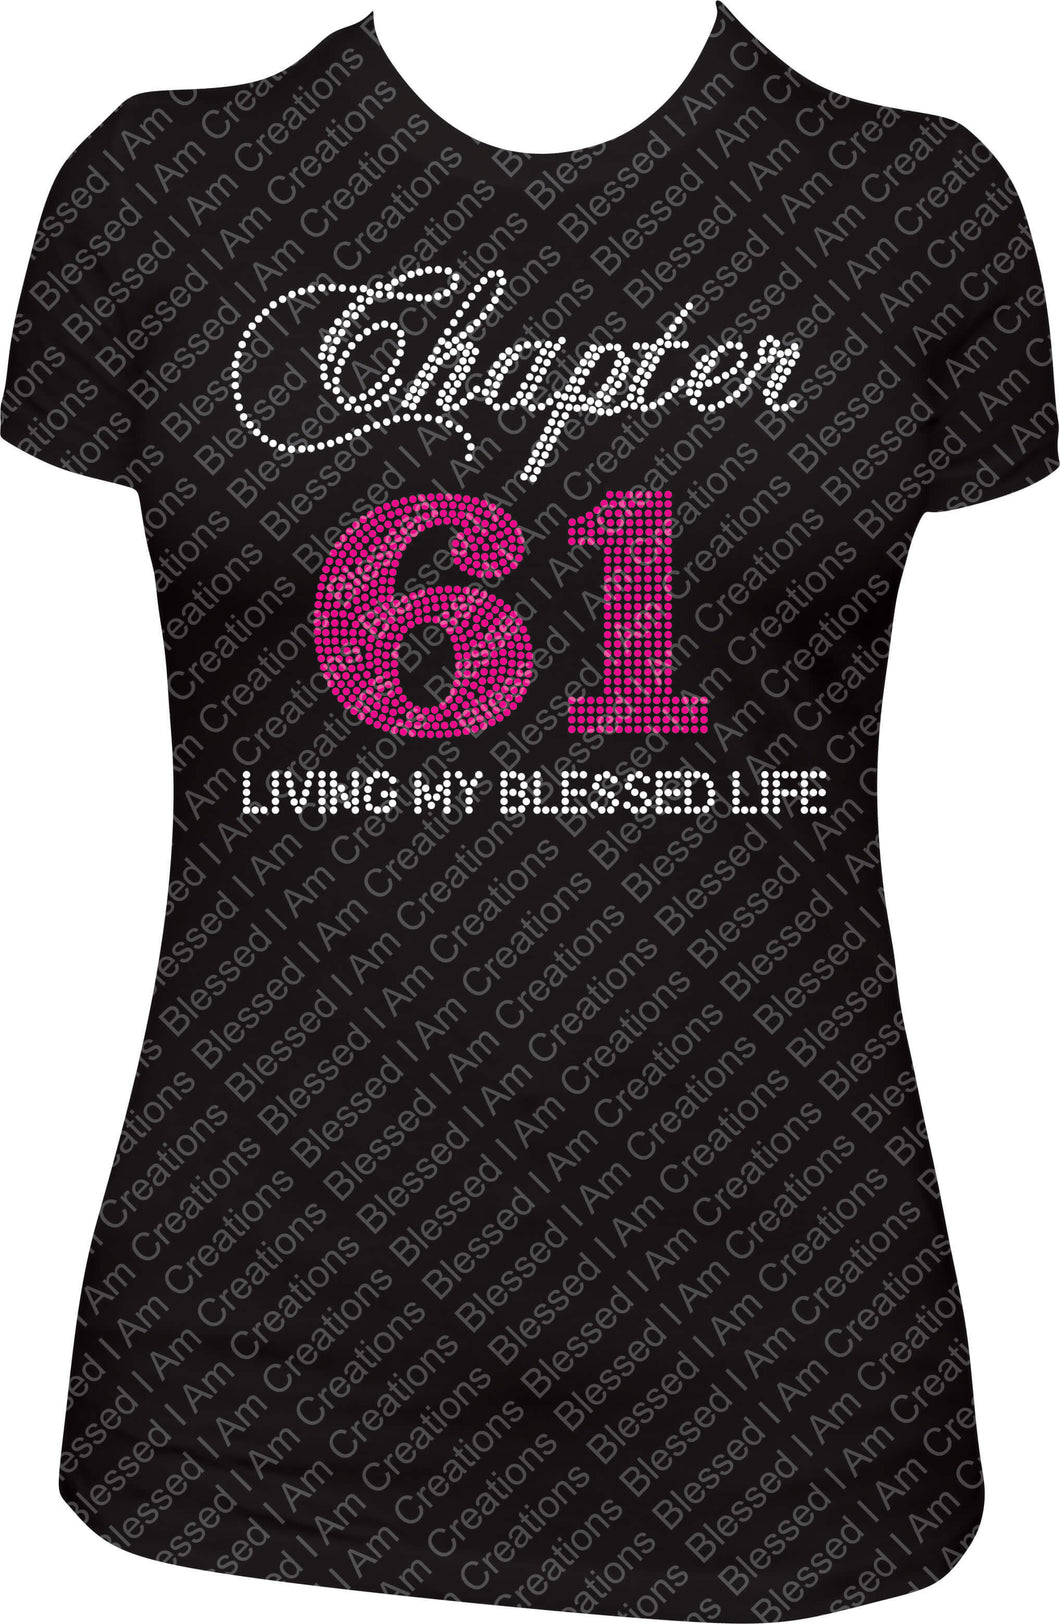 Chapter 61 birthday shirt, chapter bling shirt, living my blessed life birthday shirt, rhinestone shirt, birthday shirt, birthday girl shirt